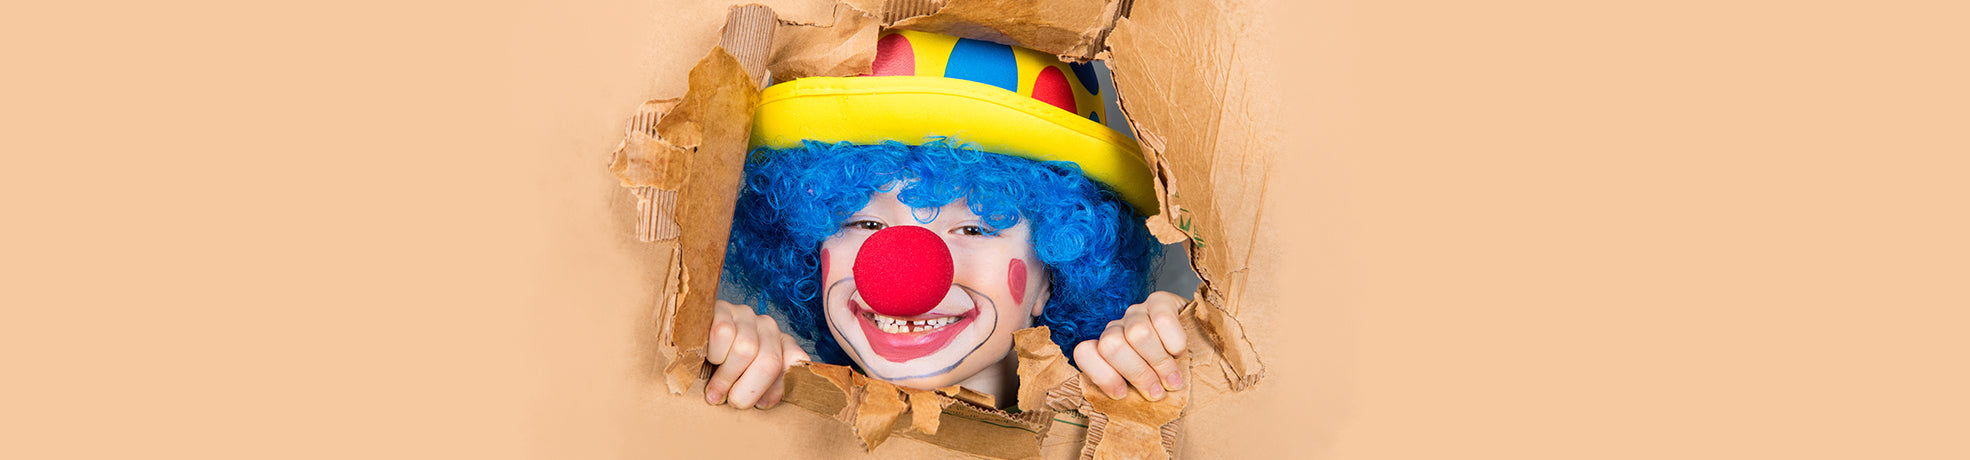 Kids Circus & Clowns Costumes